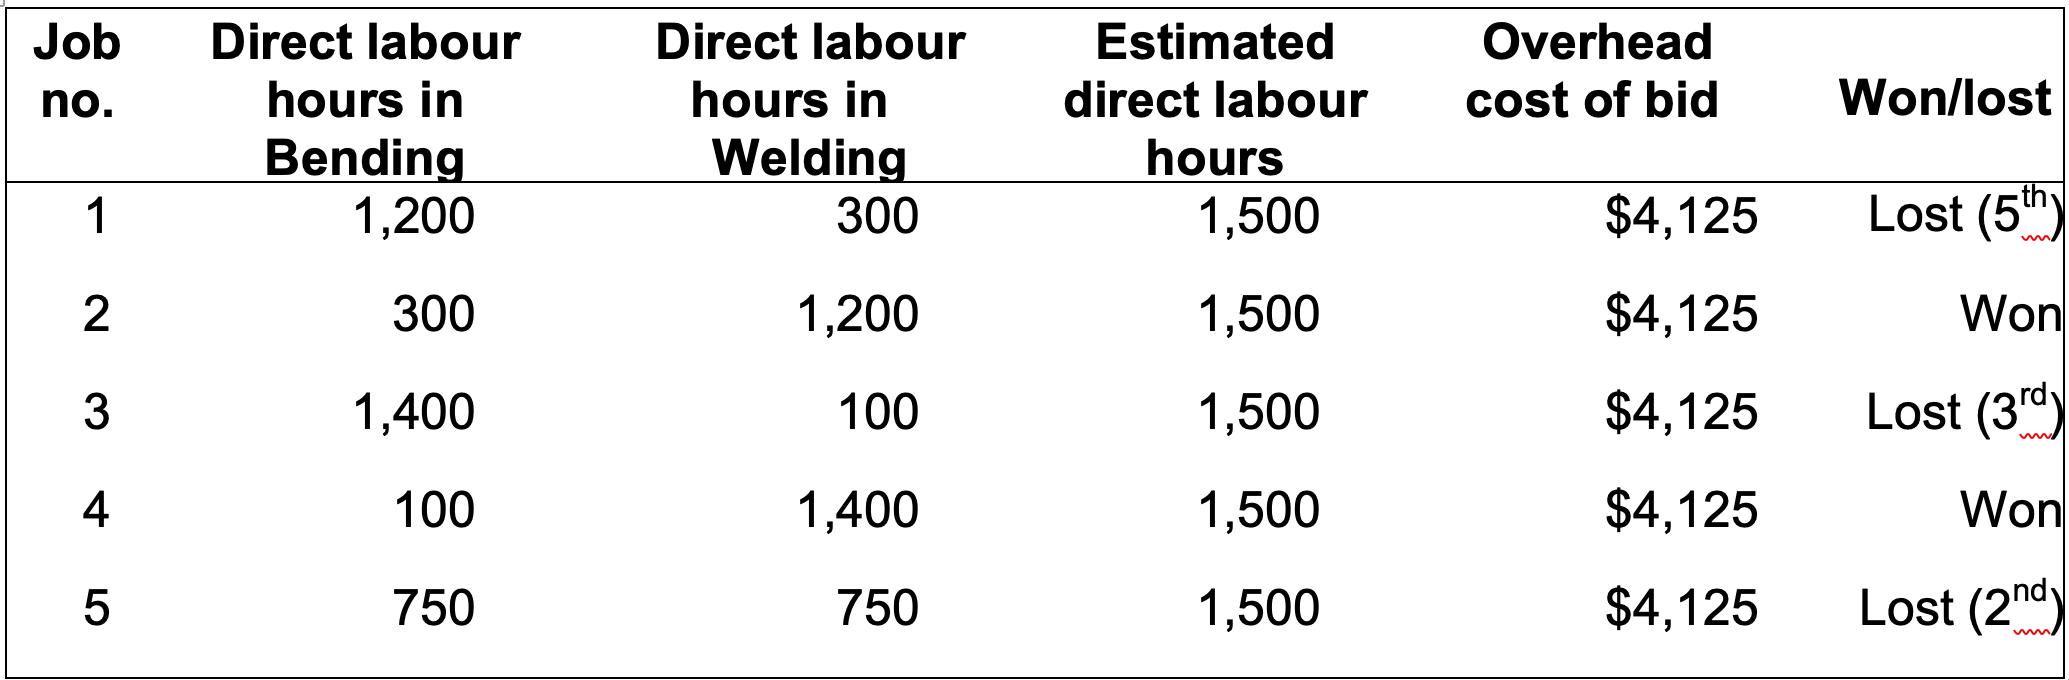 Job Overhead cost of bid no. Won/lost Direct labour hours in Bending 1,200 Direct labour hours in Welding 300 Estimated direc